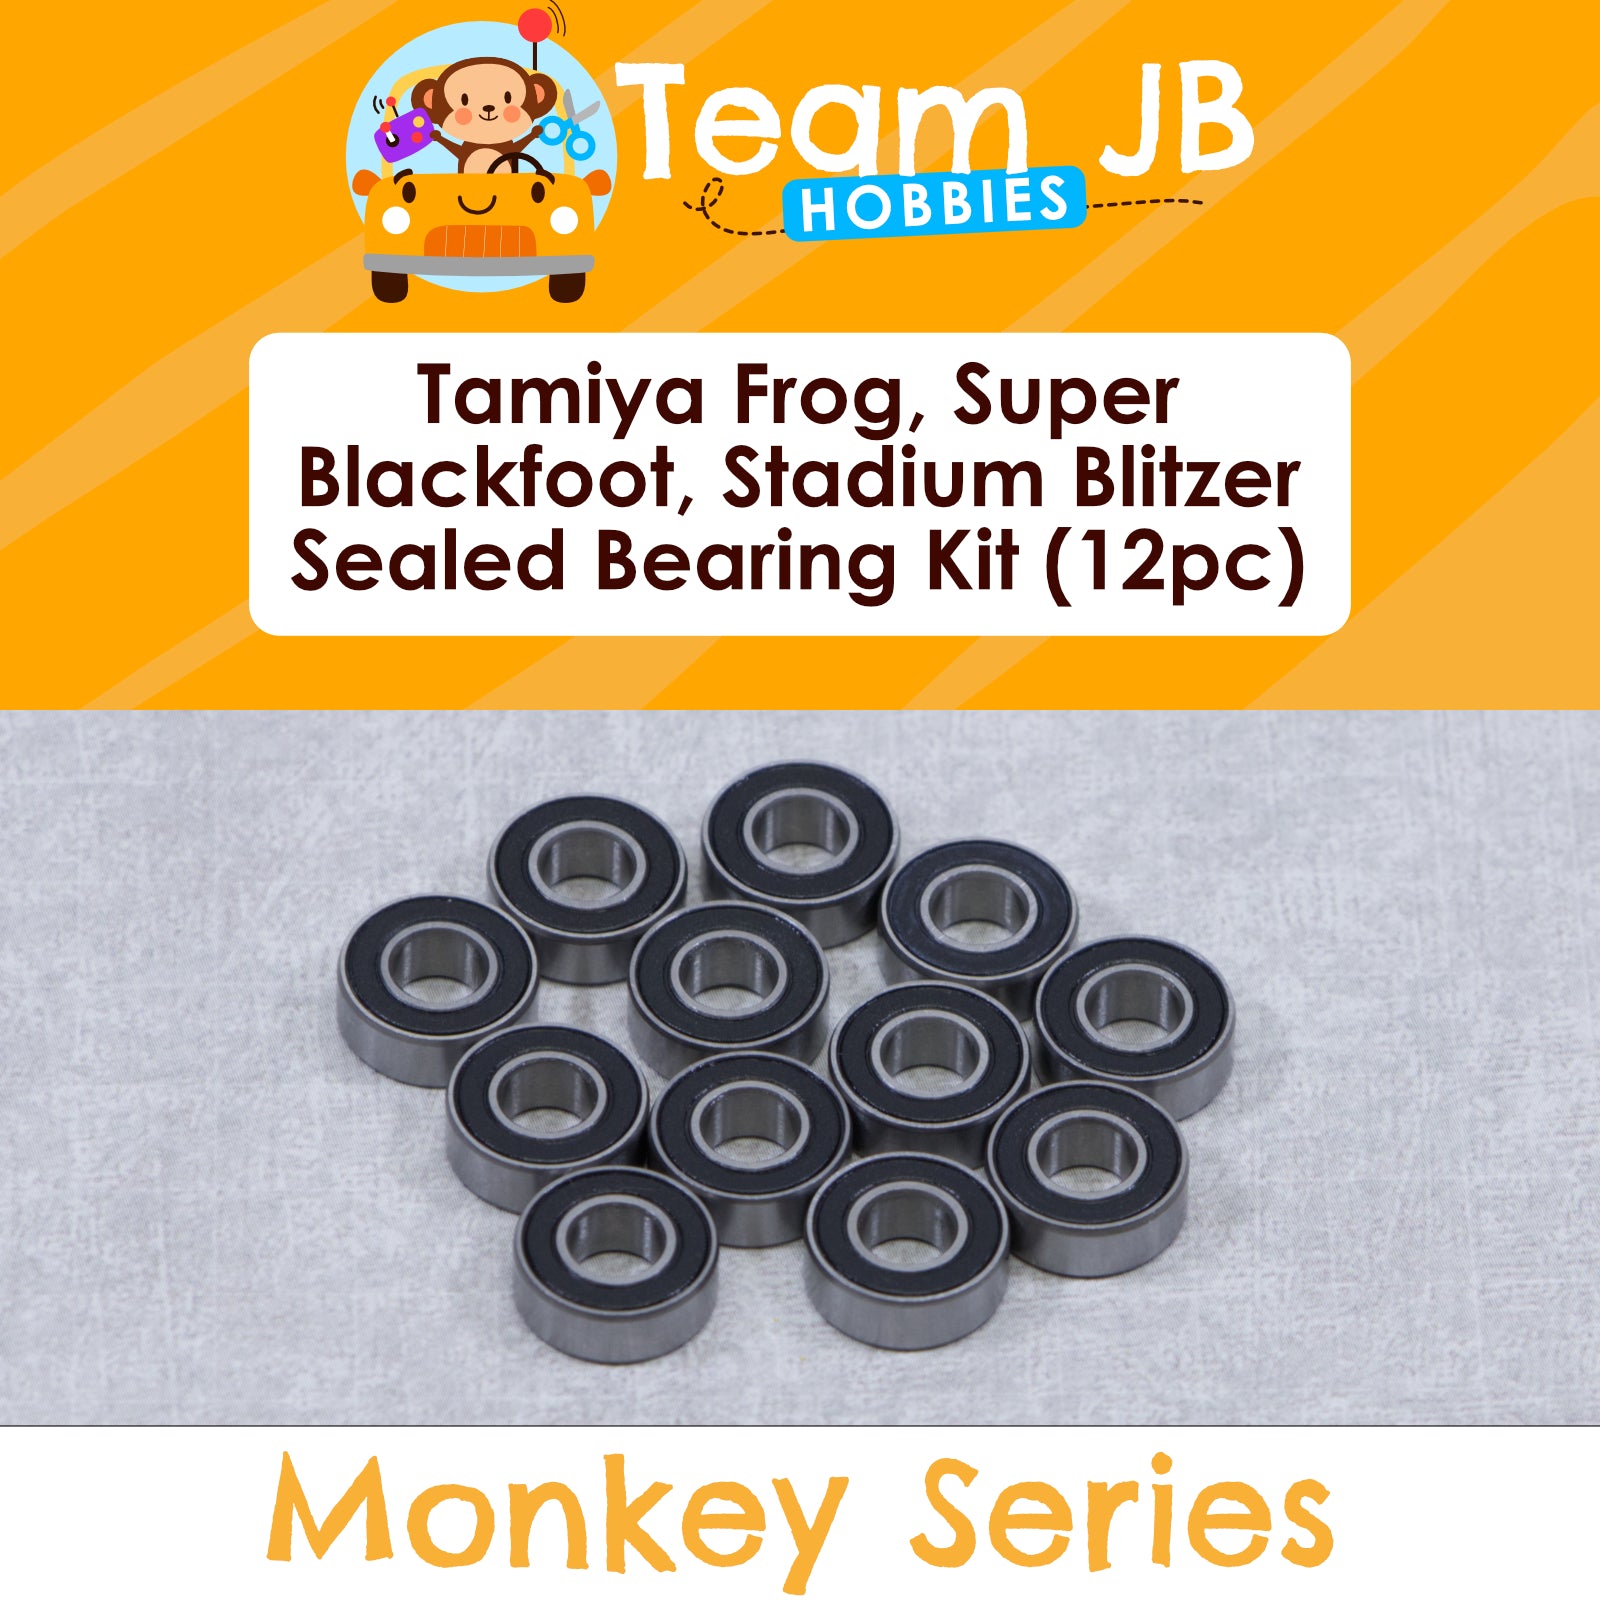 Tamiya Frog, Super Blackfoot, Stadium Blitzer, and More - Sealed Bearing Kit